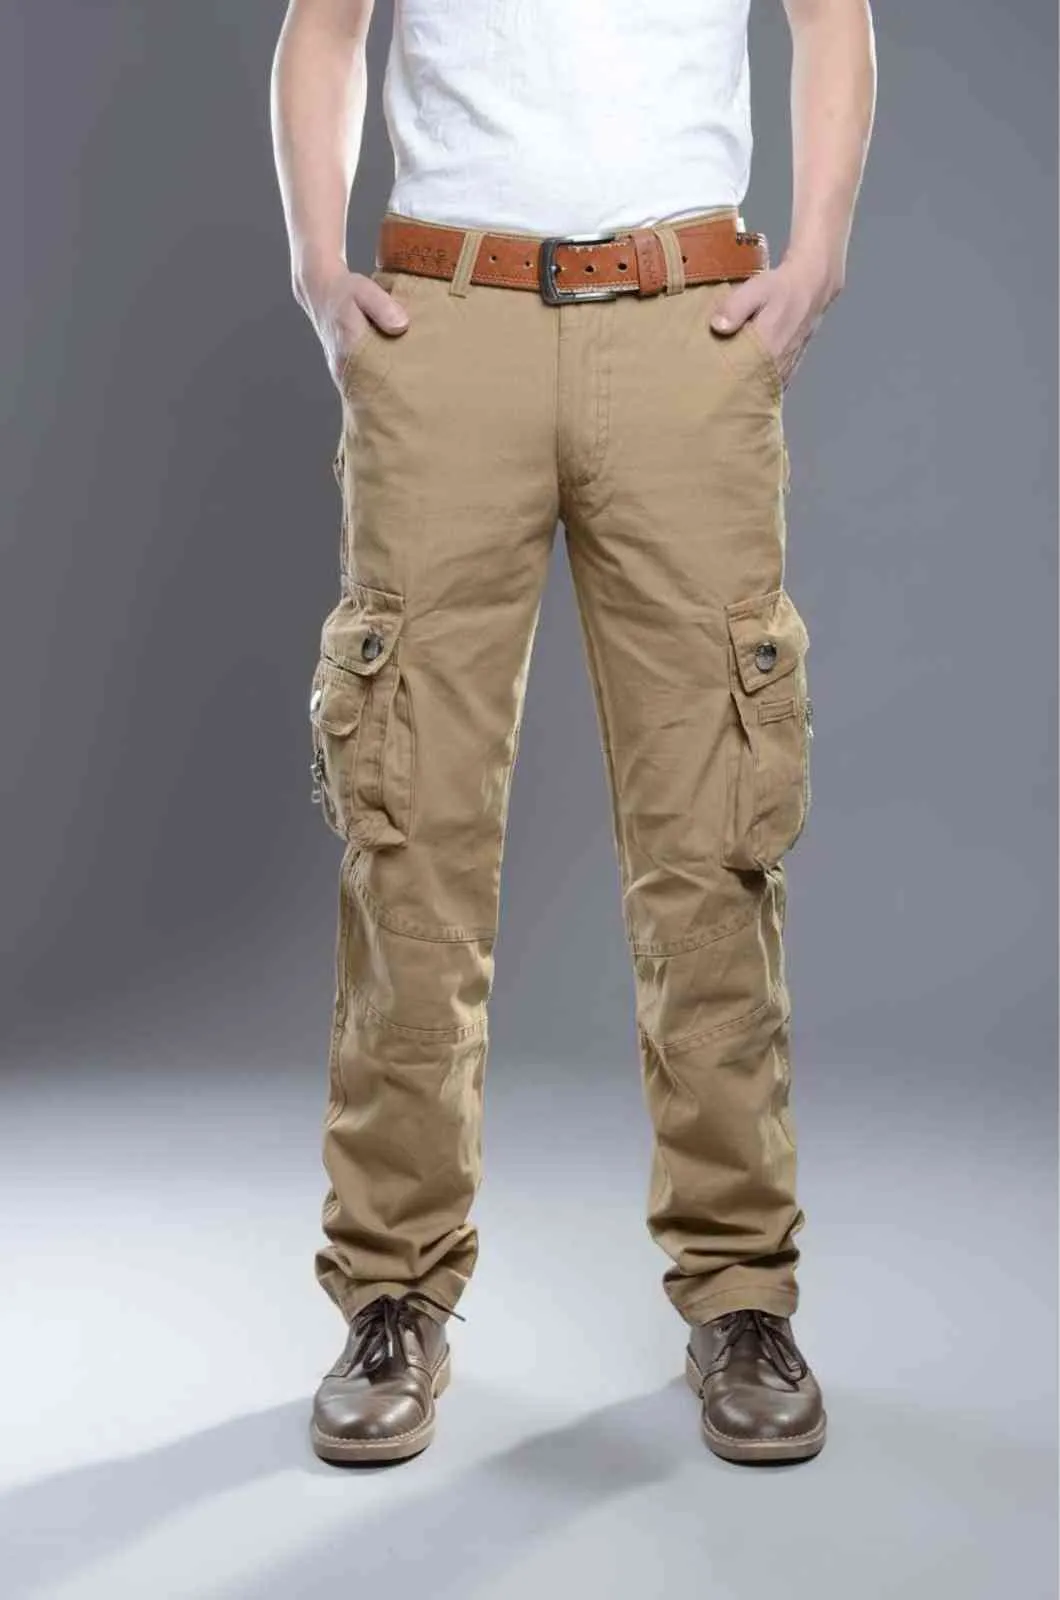 Men Elastic Waist Cargo Pockets Trousers Slim Fit Sport Combat